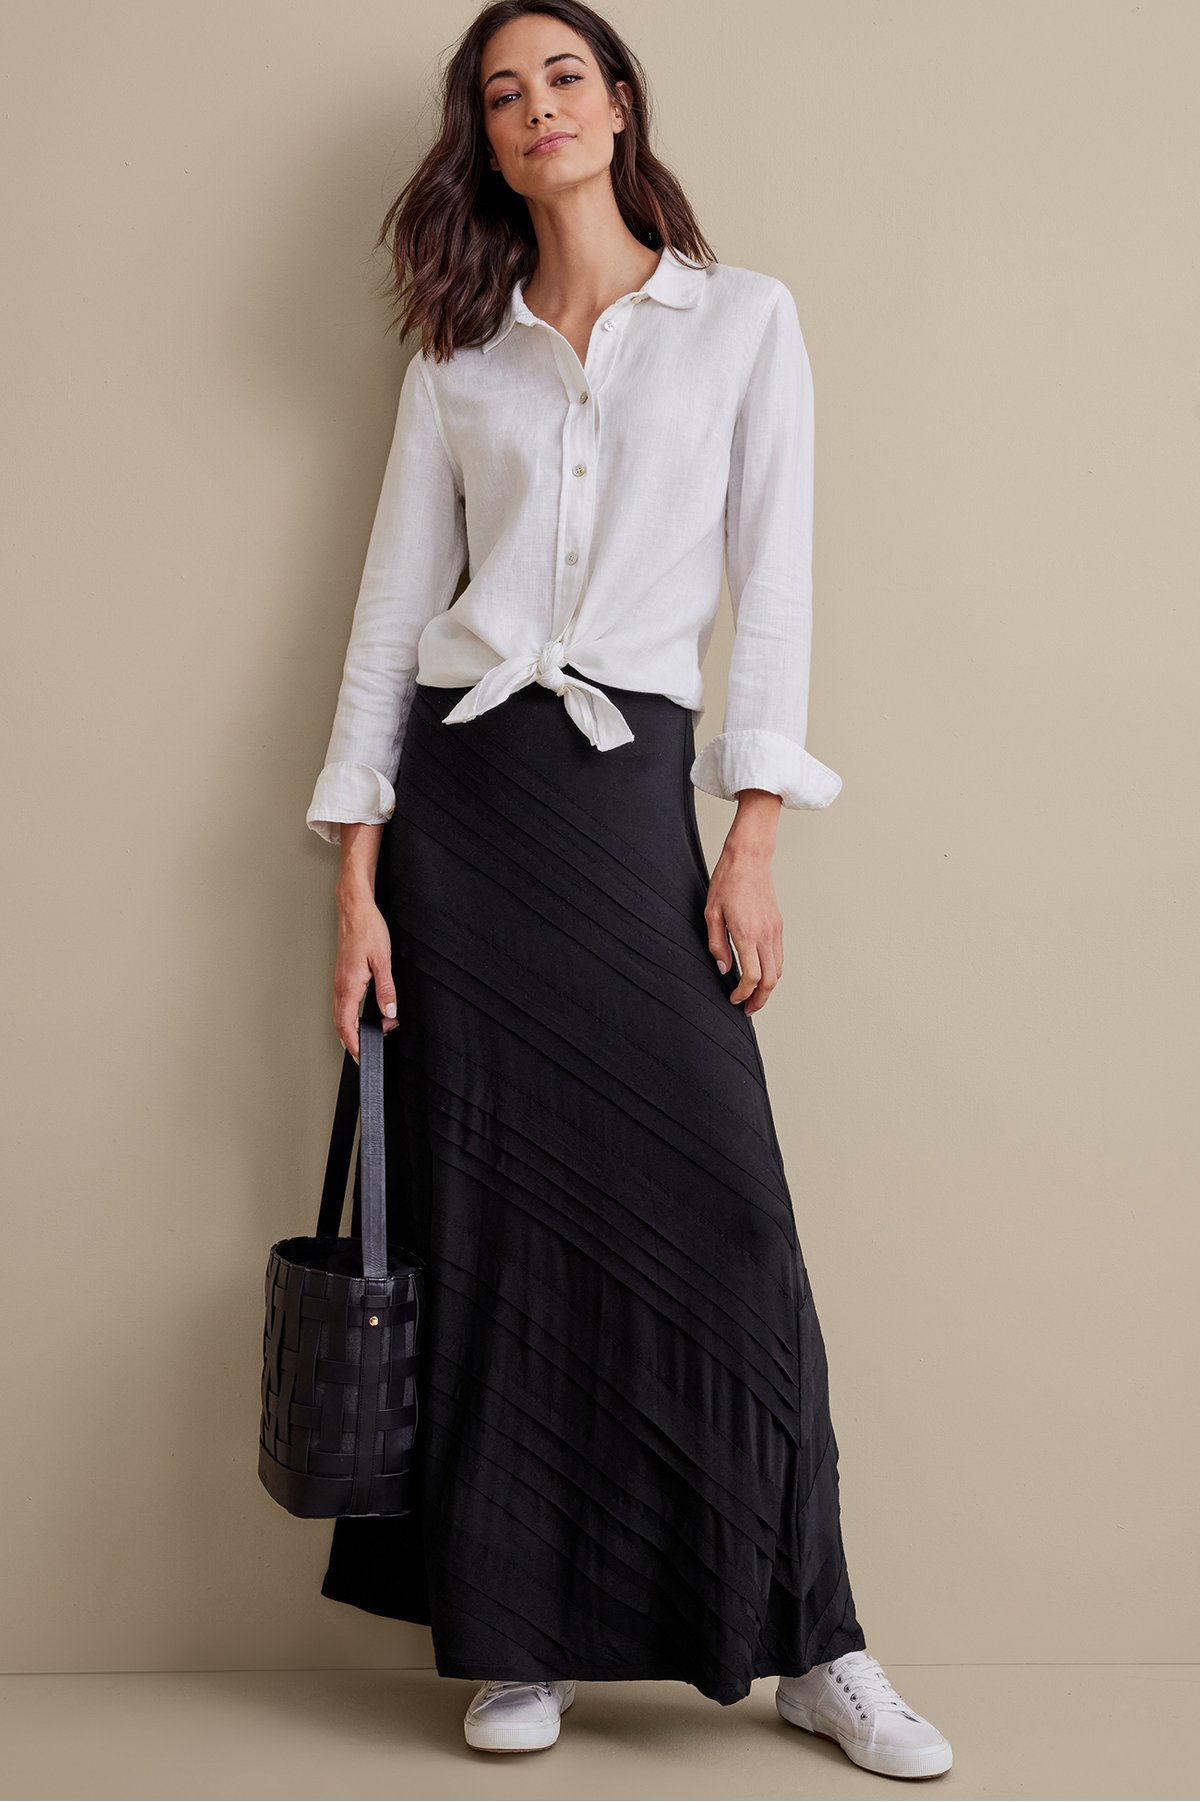 Women's Rosemary Skirt by Soft Surroundings, in Black size XL (18)